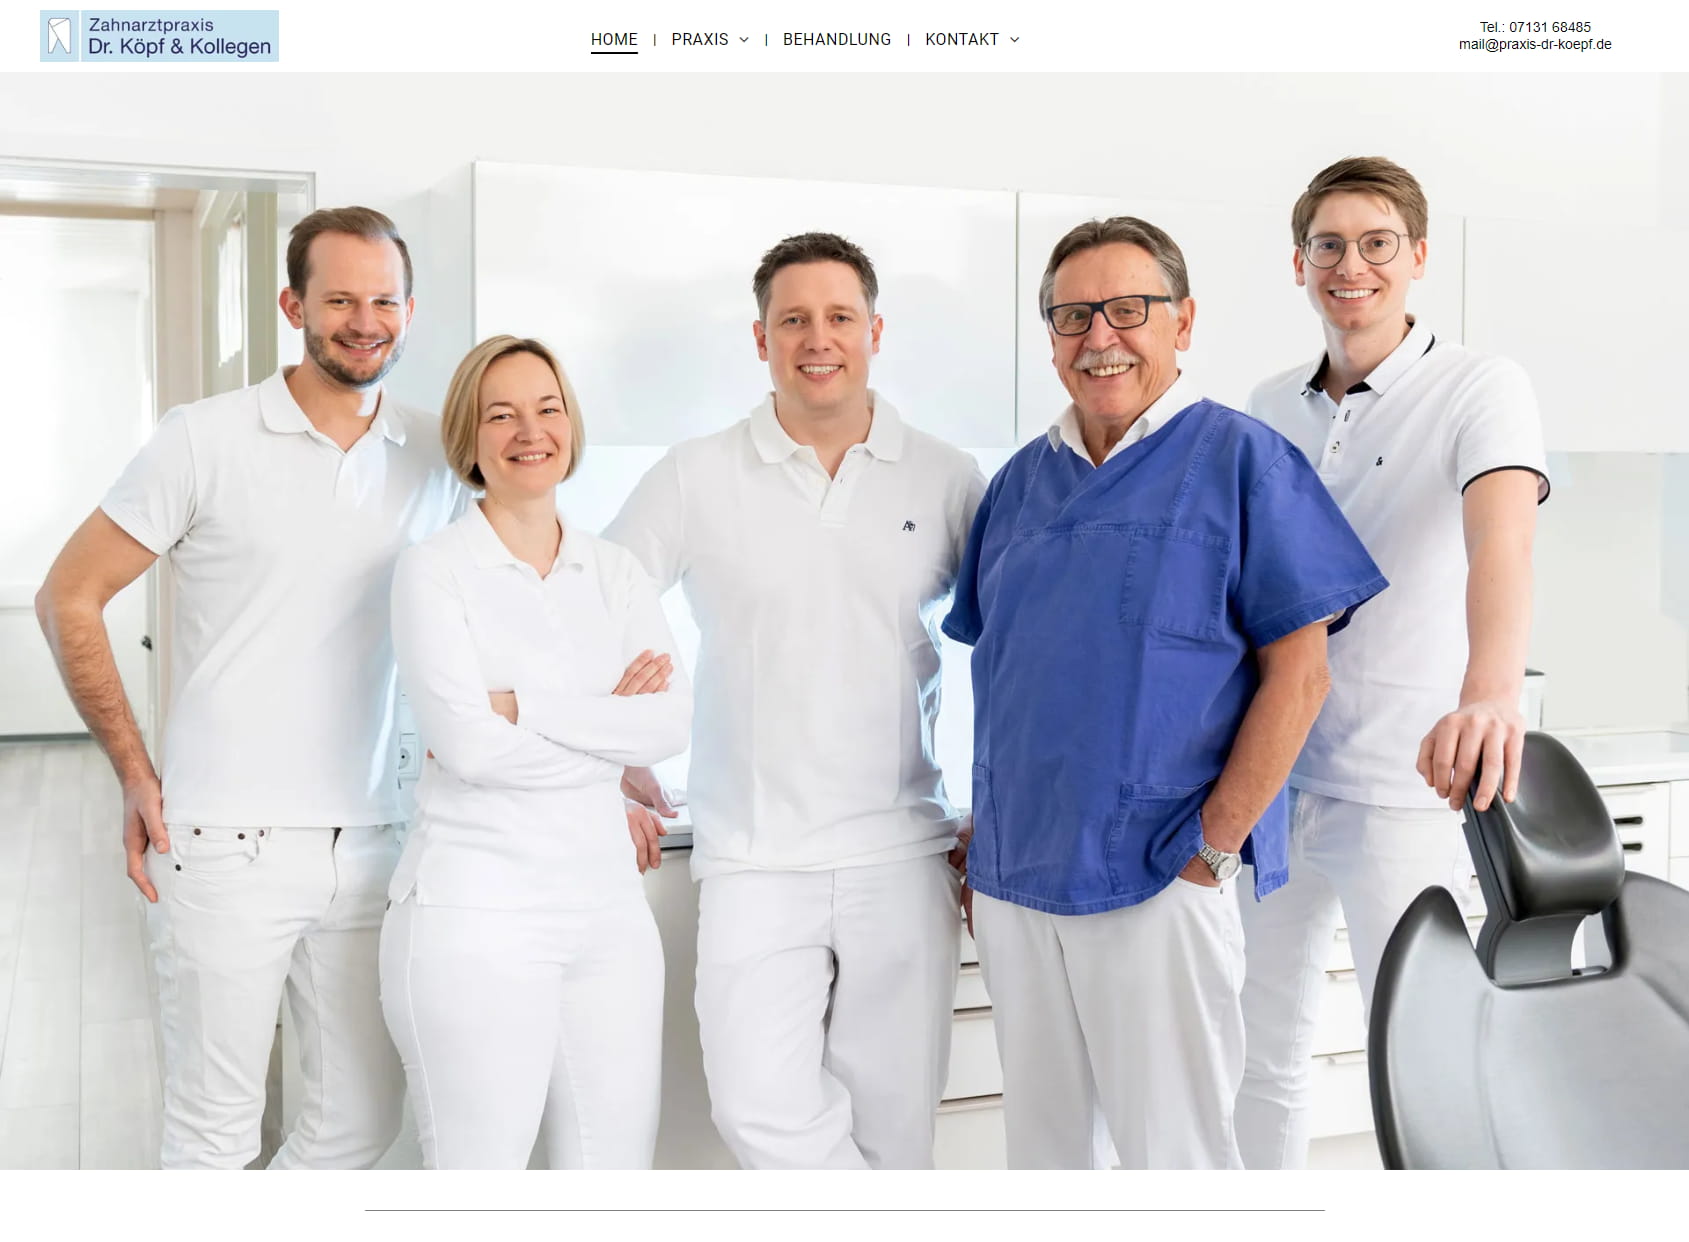 Dental Practice Dr. Kopf & colleagues